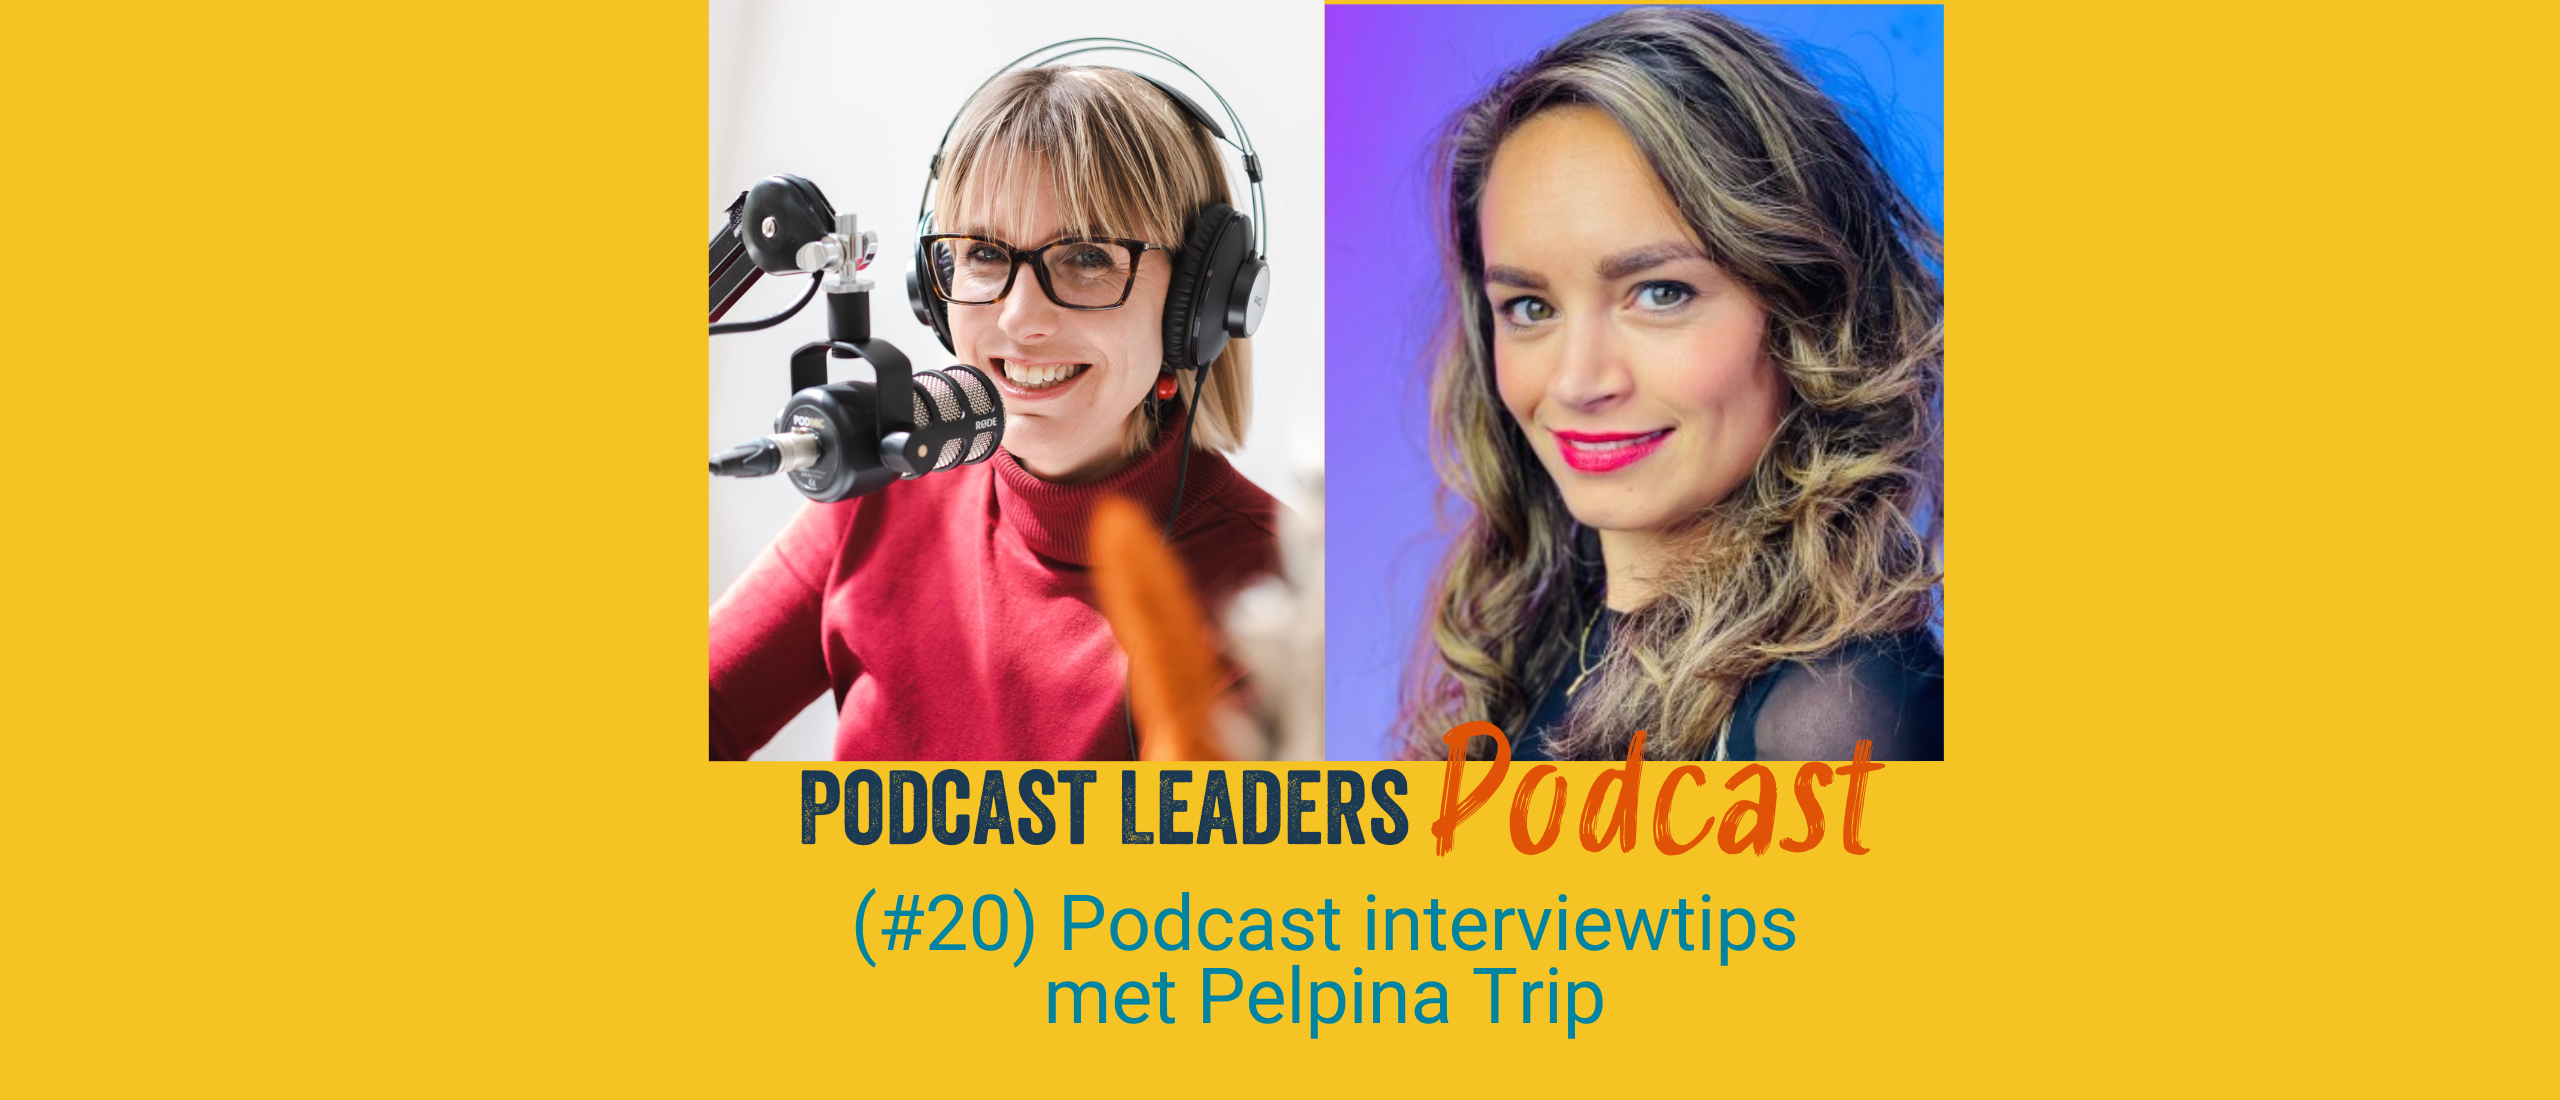 Podcast interviewtips met Pelpina Trip